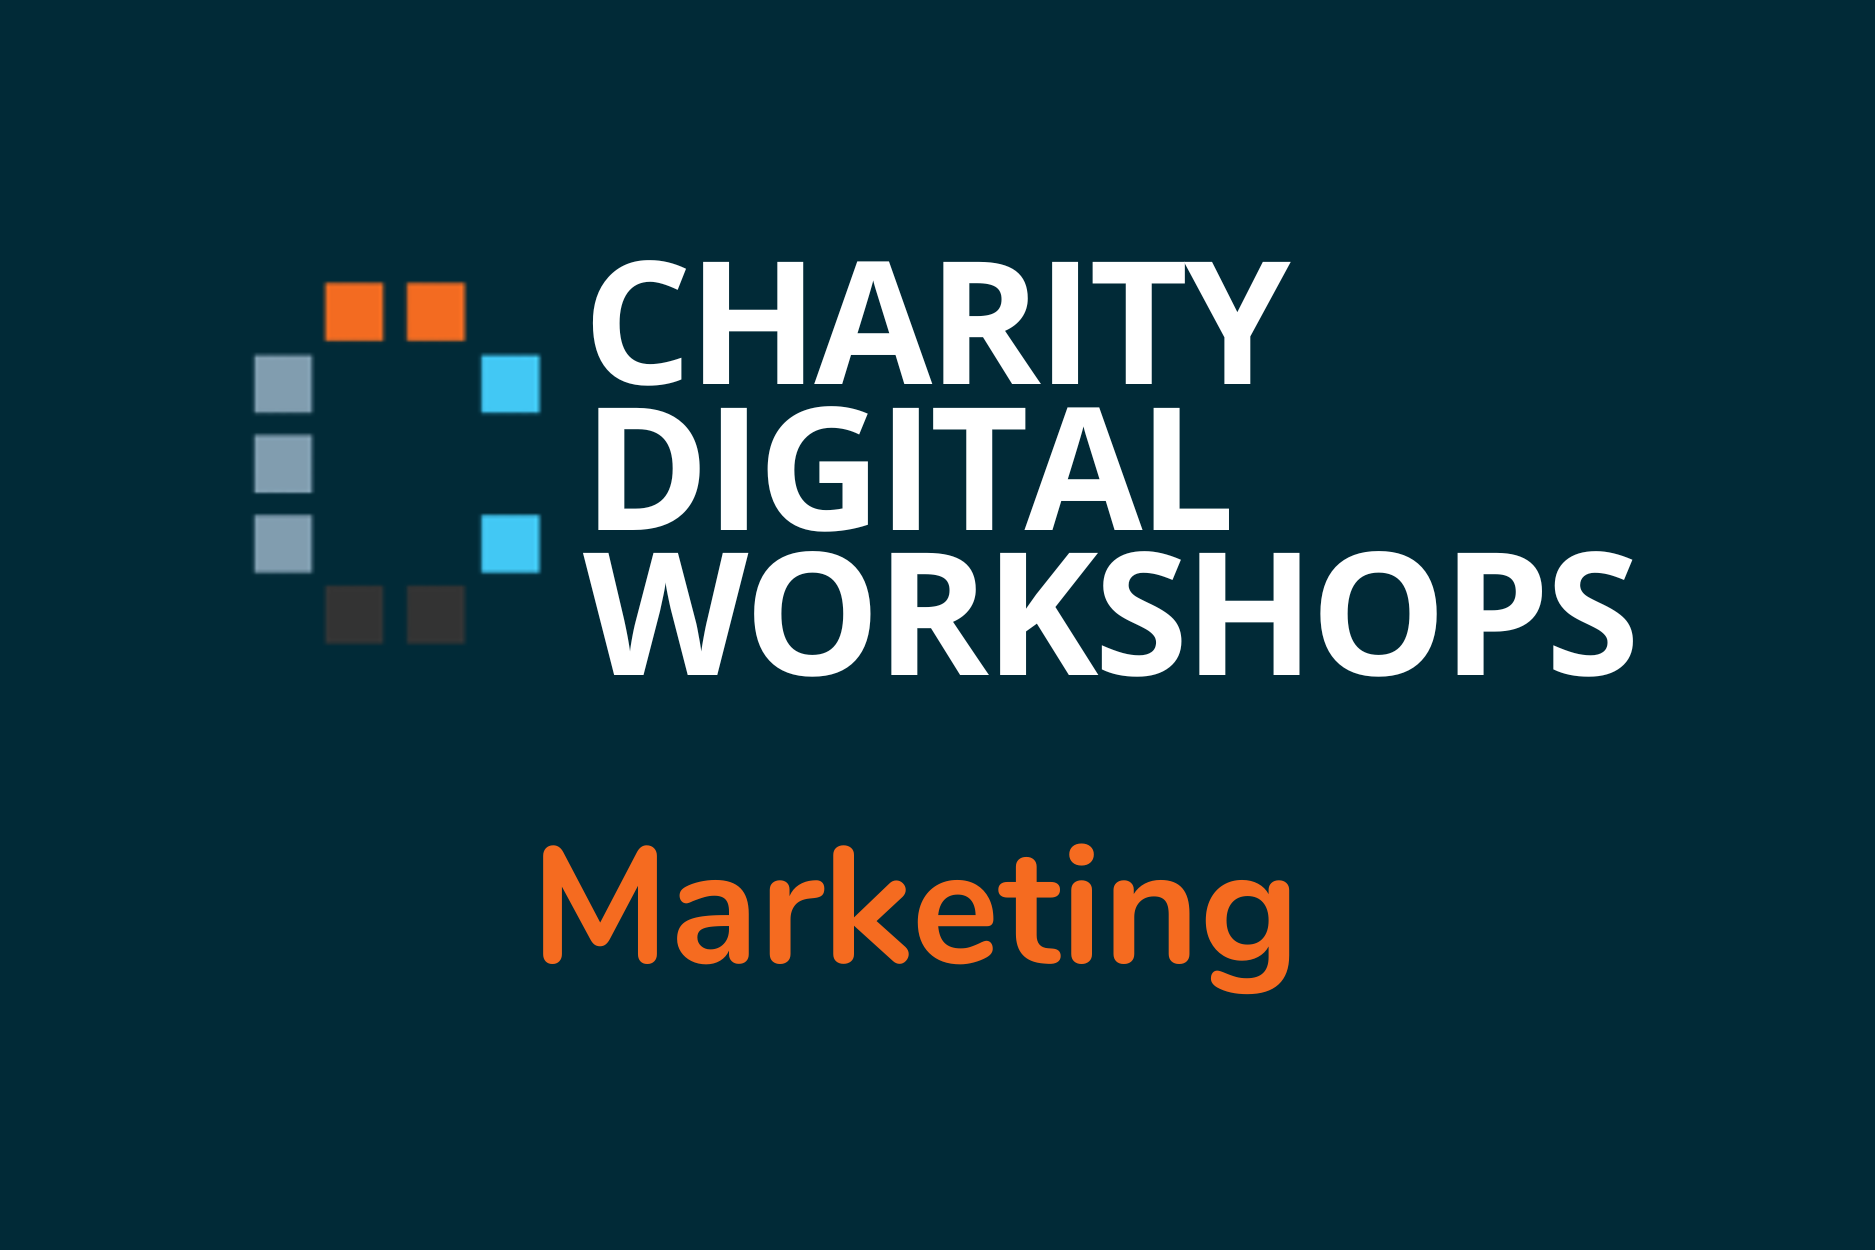 Charity Digital Workshops: Marketing